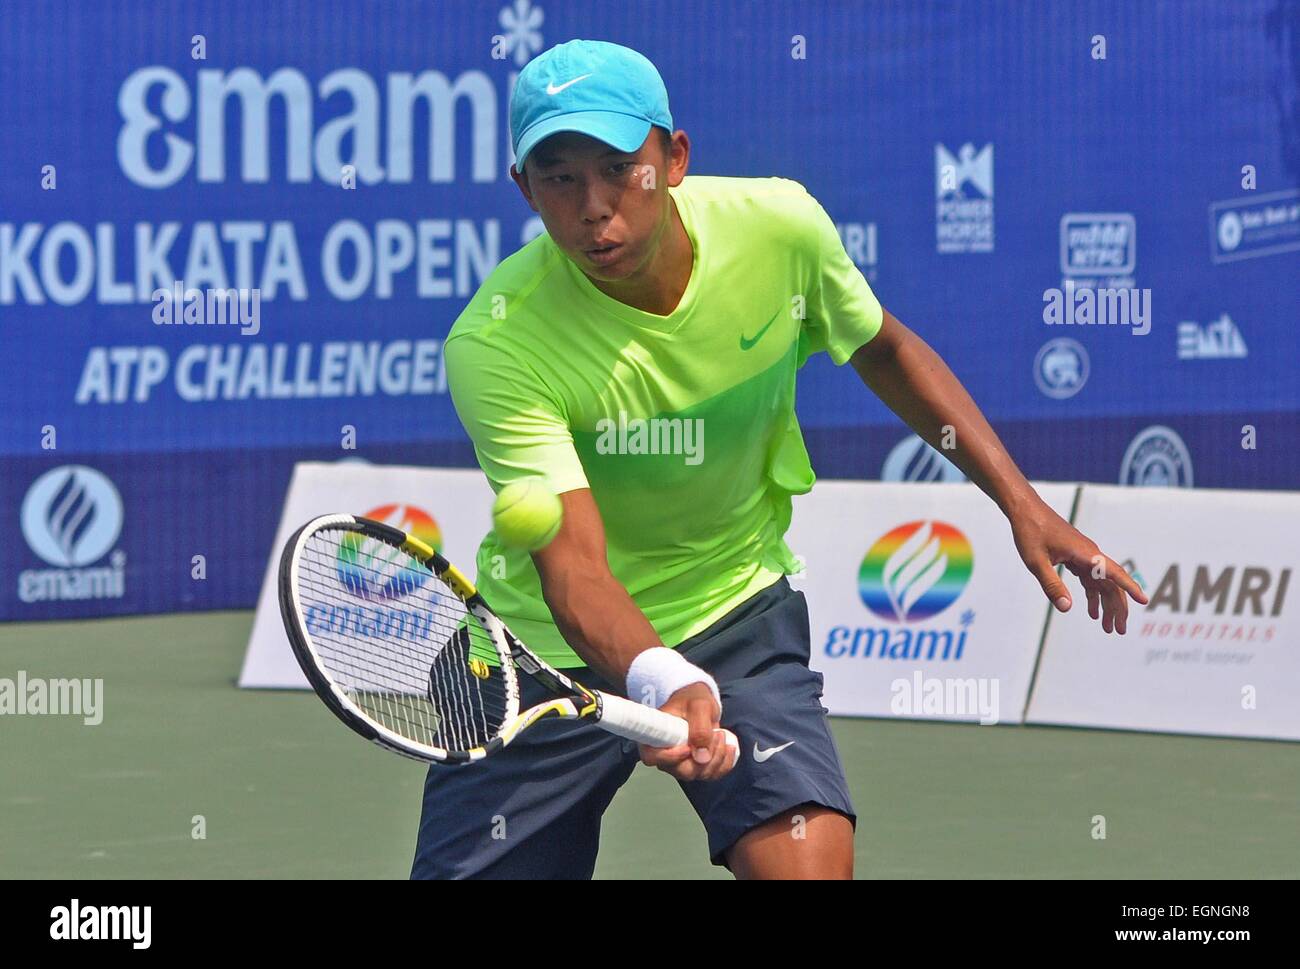 Kolkata, India. 27th February, 2015. Tennis Player Ti Chen in action during  the Emami Kolkata Open